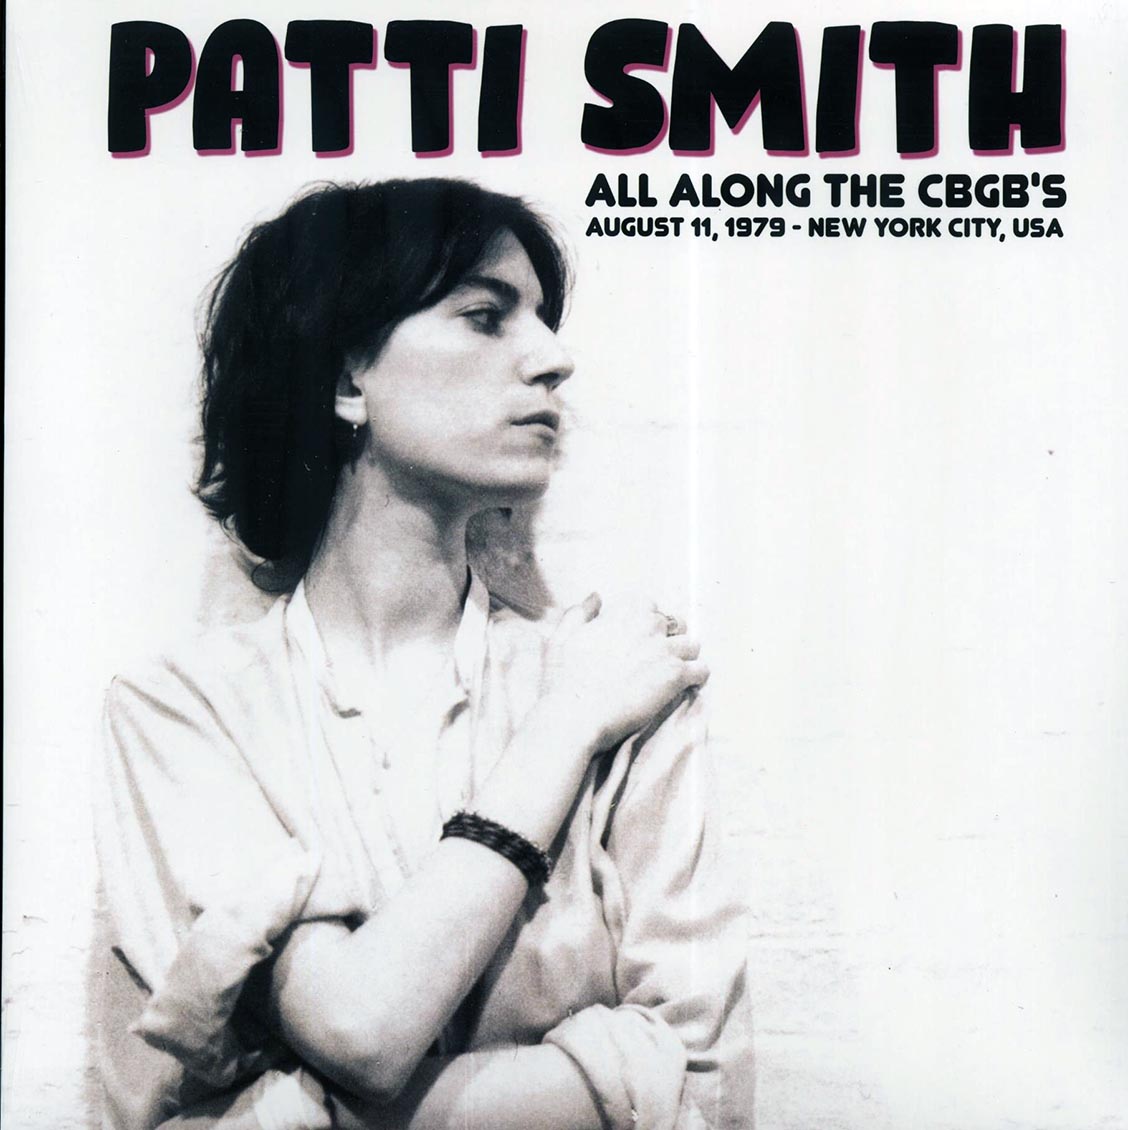 Patti Smith - All Along The CBGB's, August 11, 1979, New York City, USA - Vinyl LP